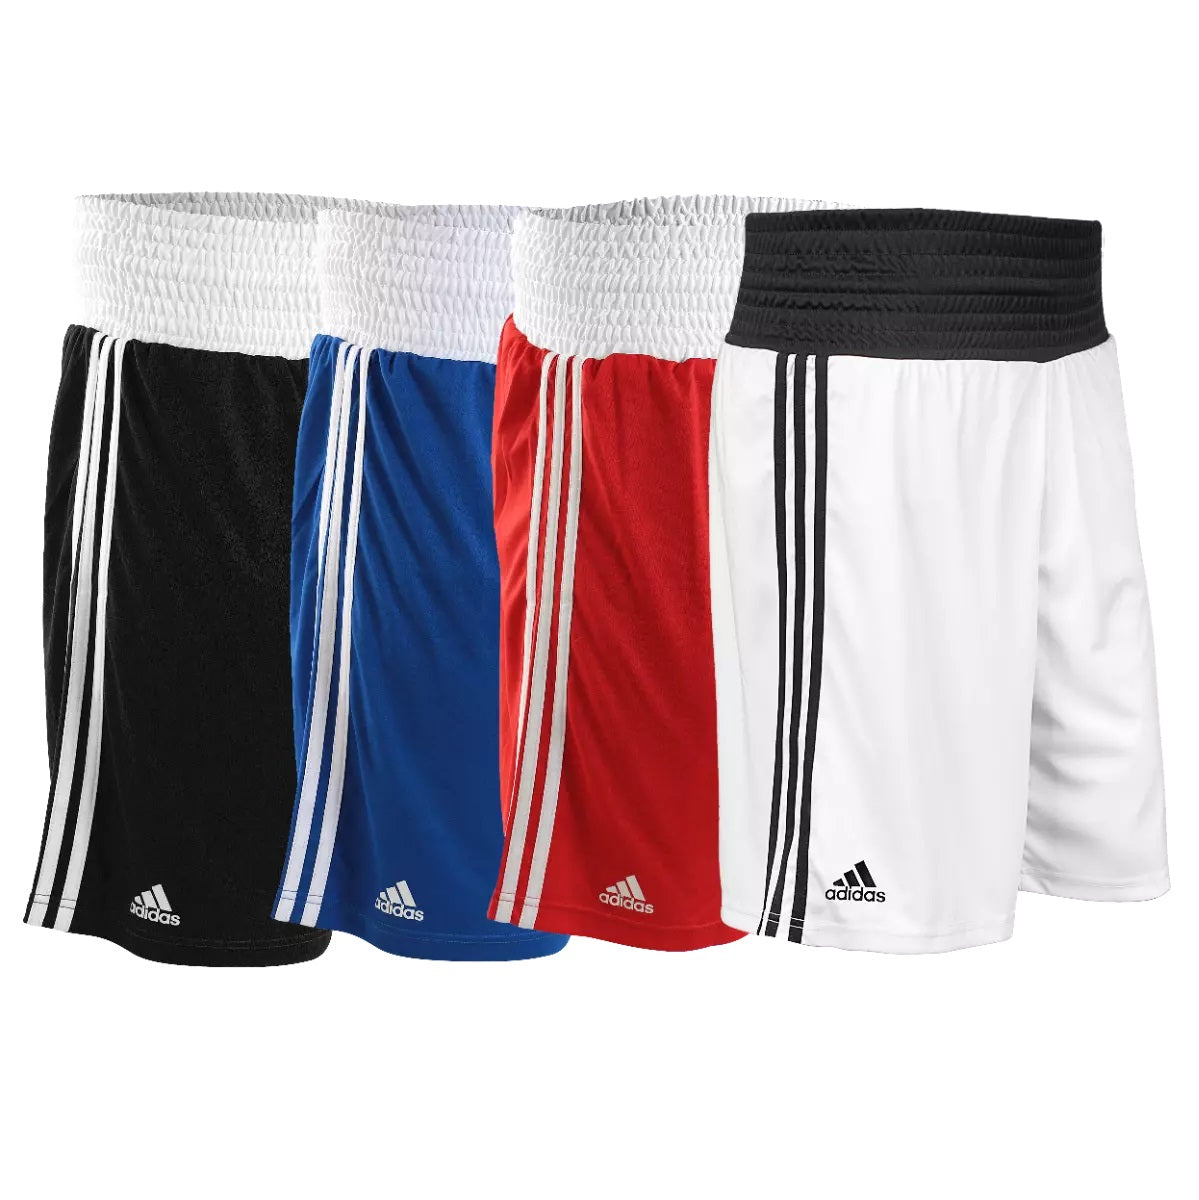 adidas Base Boxing Shorts Mens Black White Red Blue - Budo Online